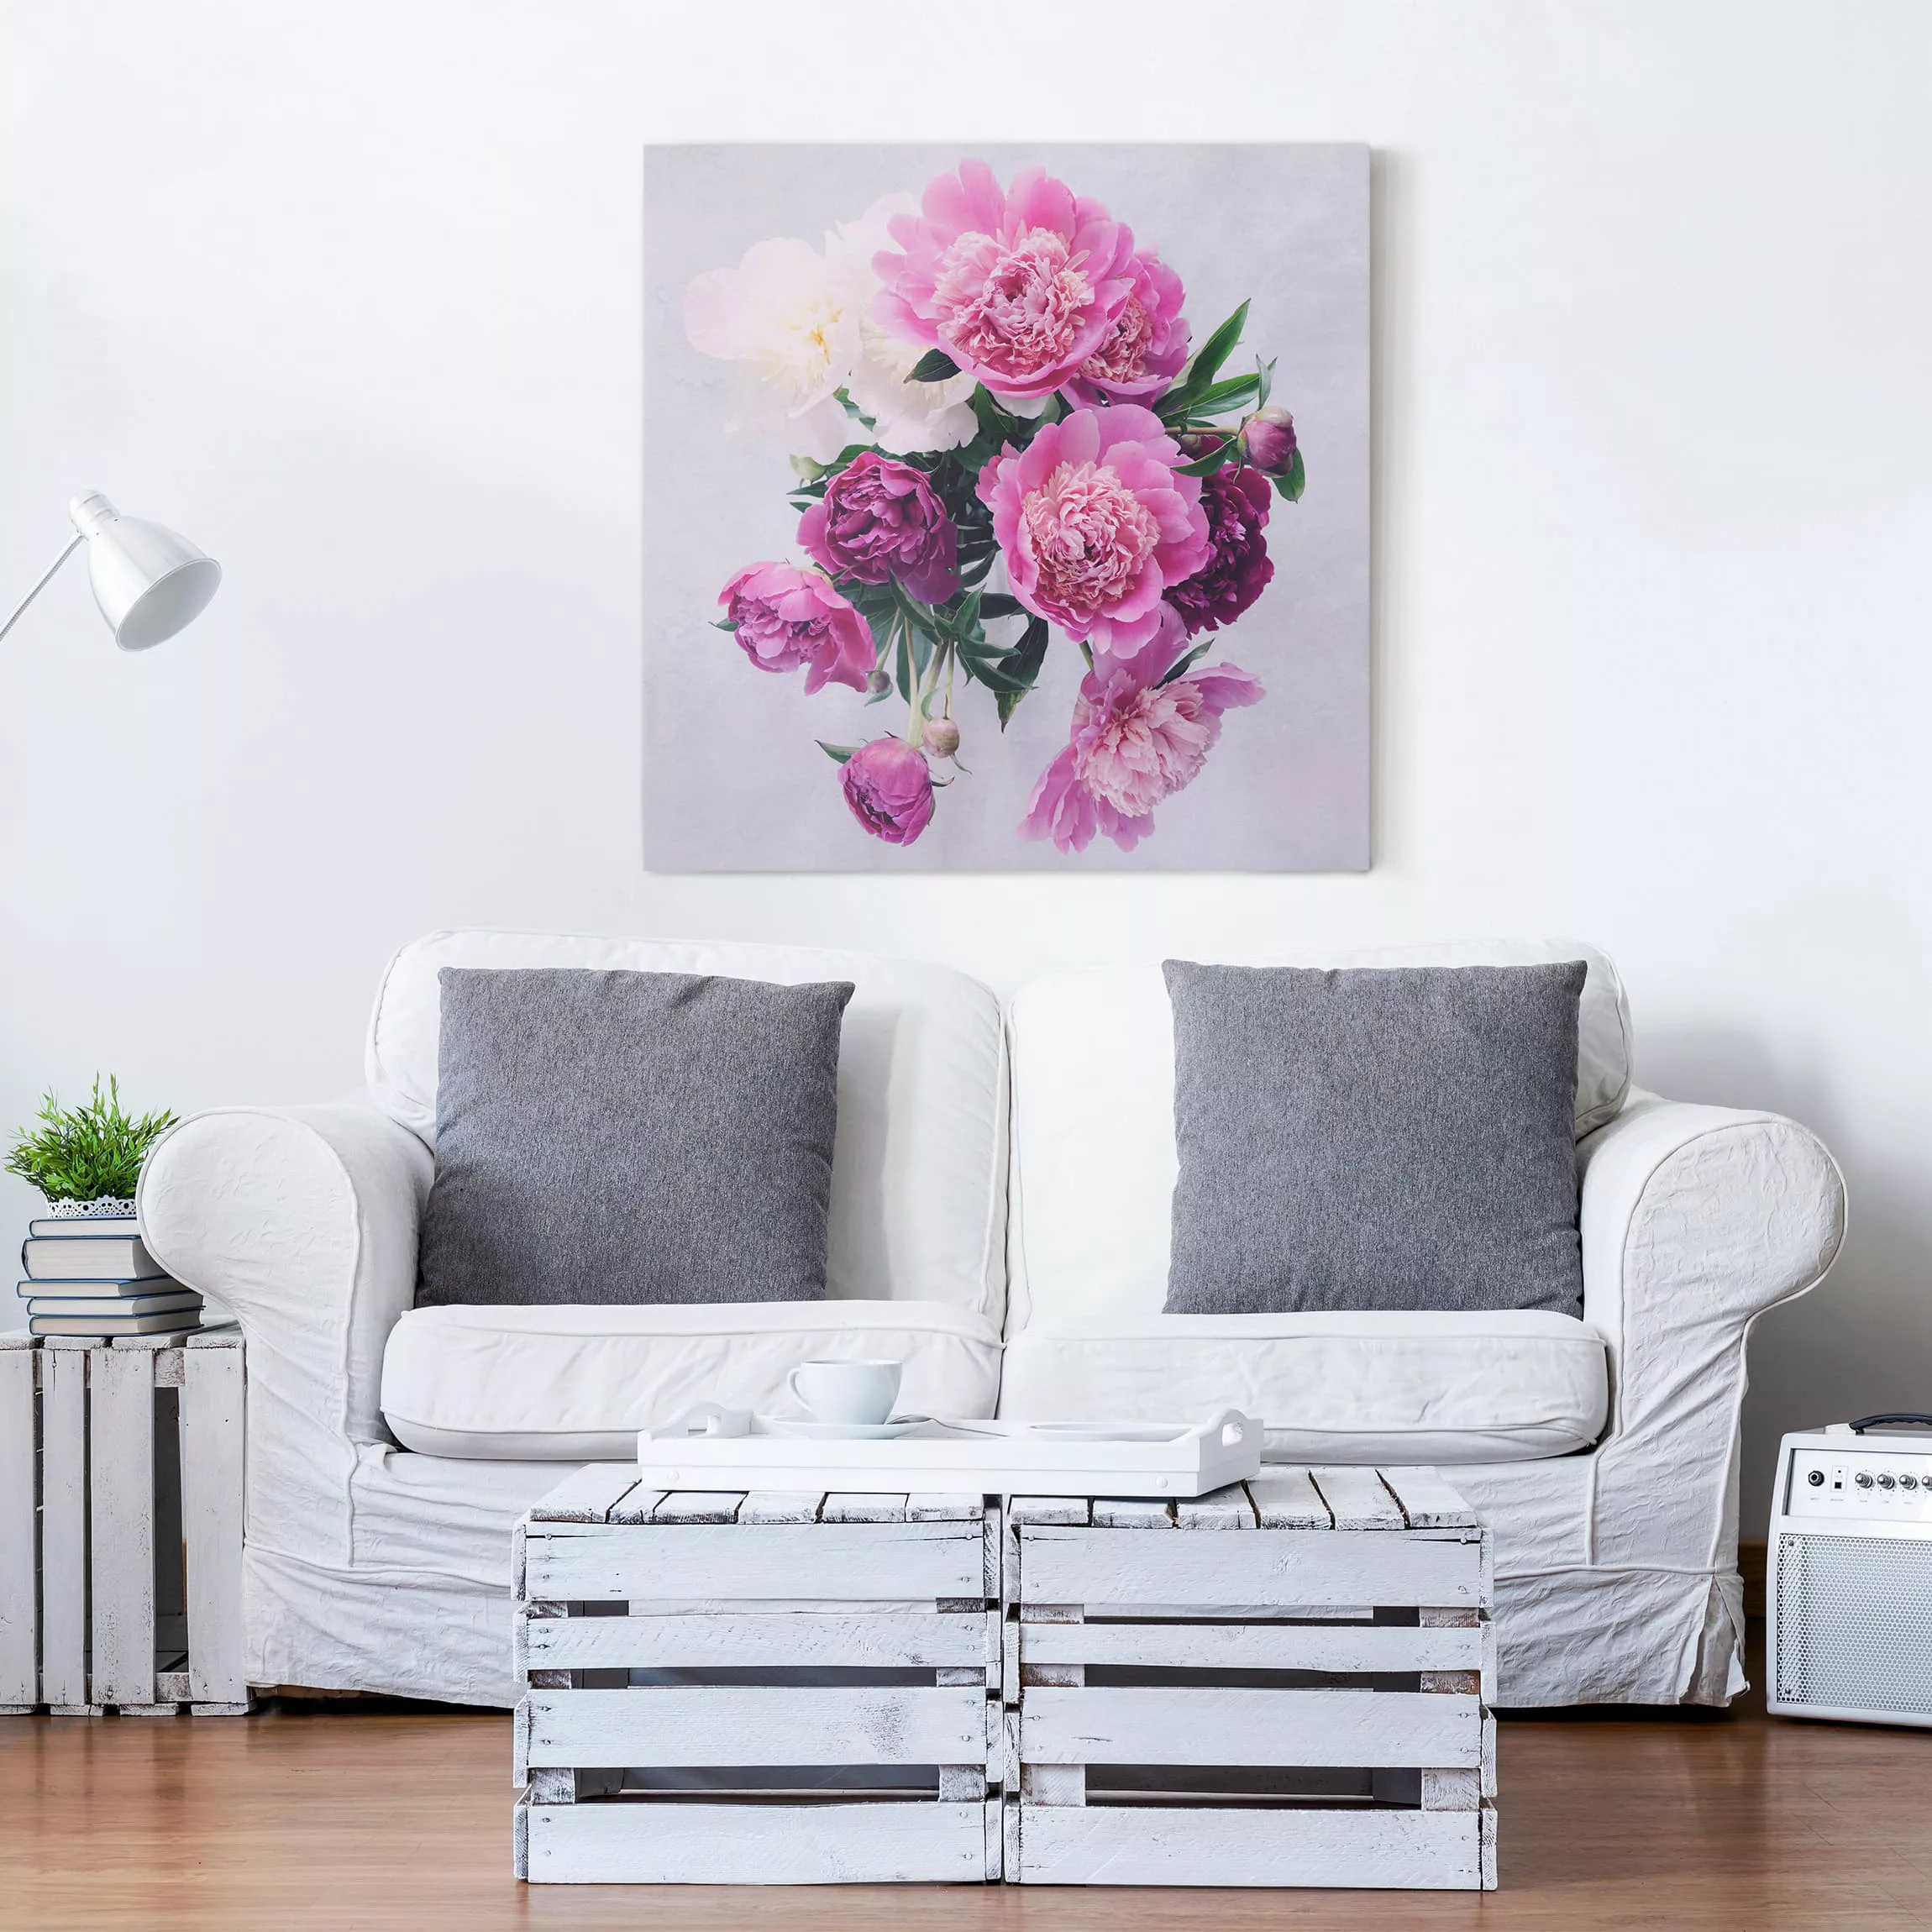 Leinwandbild Blumen - Quadrat Pfingstrosen Shabby Rosa Weiß günstig online kaufen